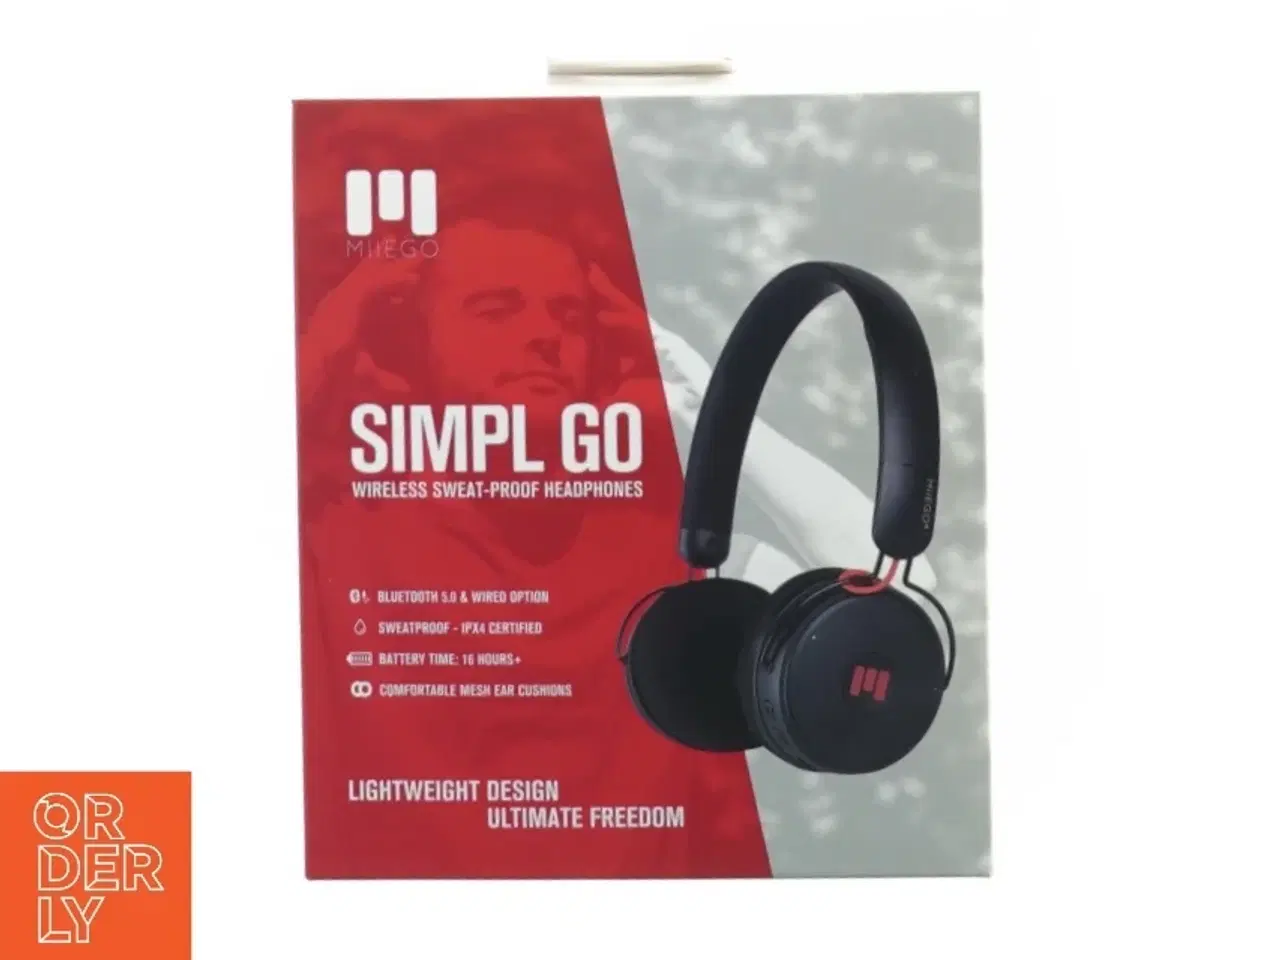 Billede 1 - Simpl Go wireless sweat-proof headphones fra Miiegu (str. 17 x 20 cm)